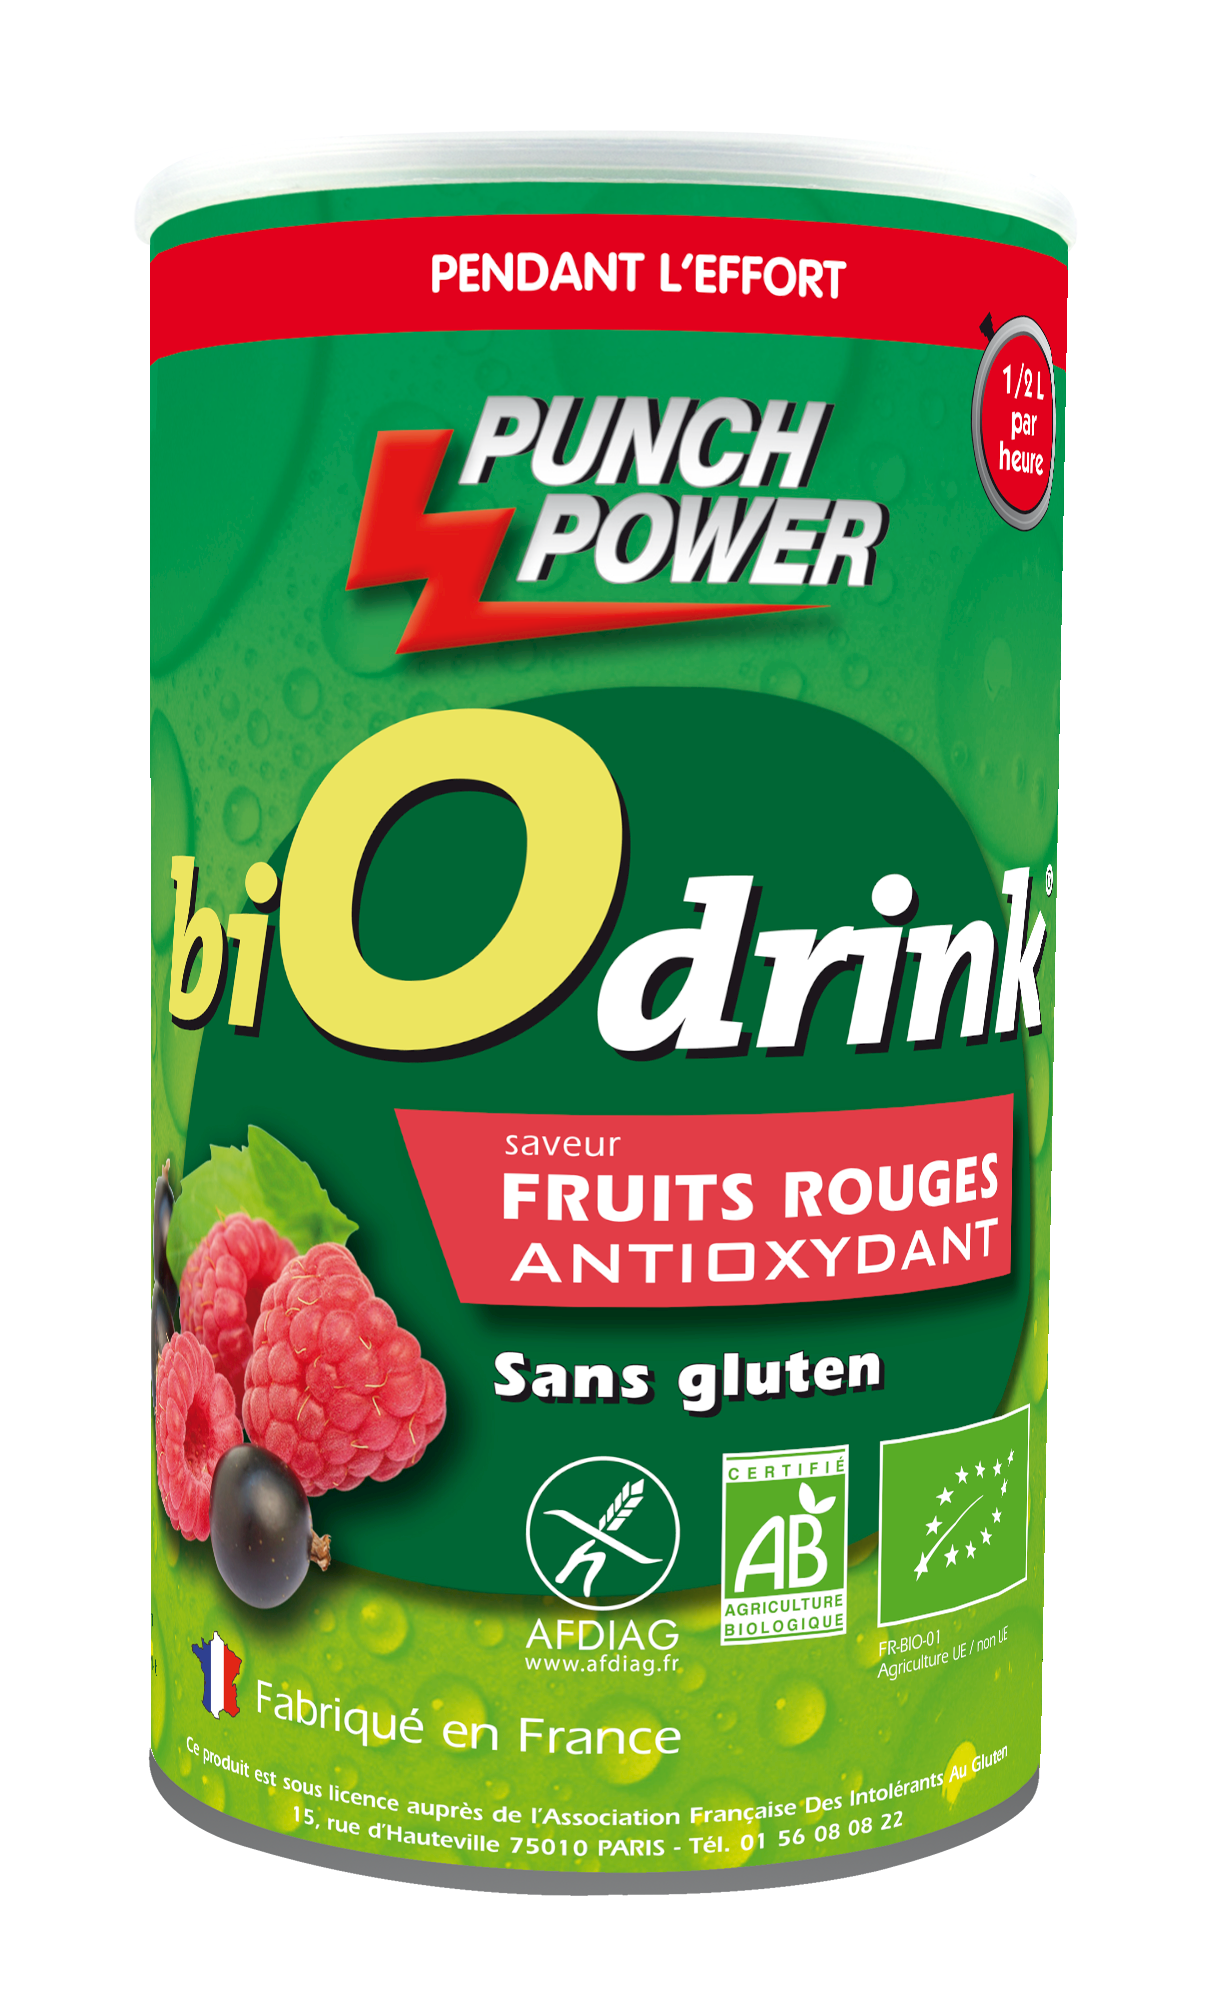 Punch Power - BiOdrink Antioxydant Fruits rouges sans gluten - Energy drink